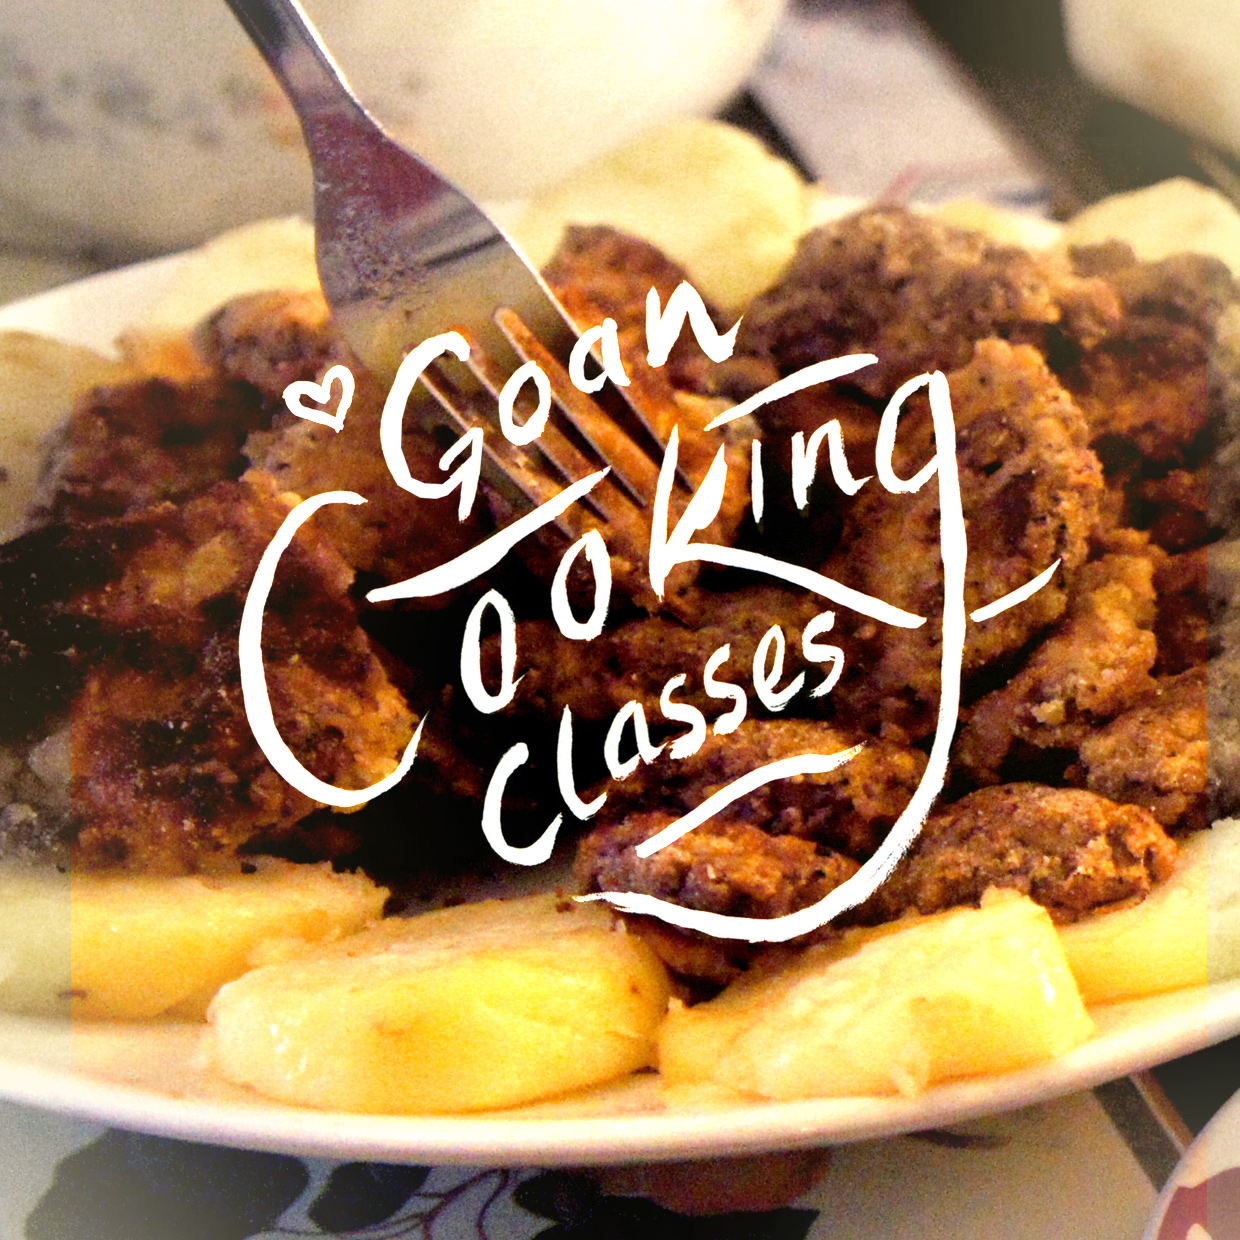 Goan-Cooking-Classes-square_2